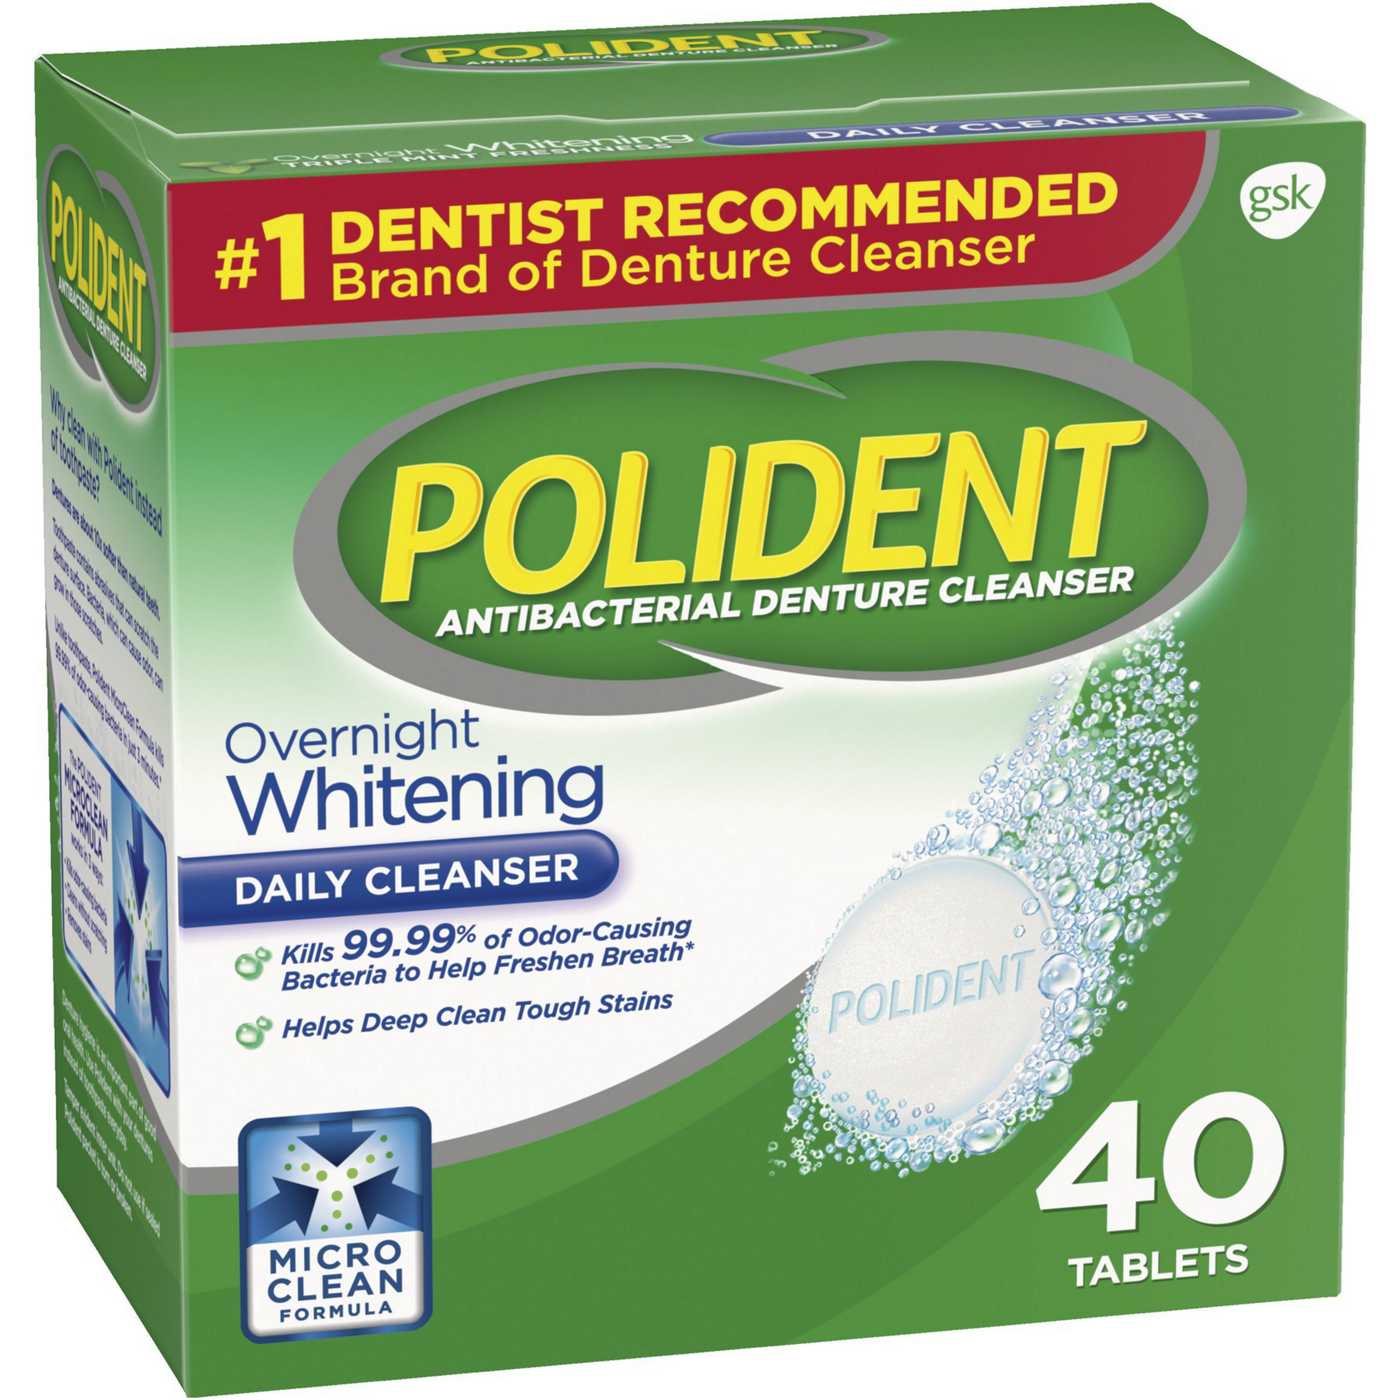 Polident Overnight Whitening Antibacterial Denture Cleanser; image 1 of 8